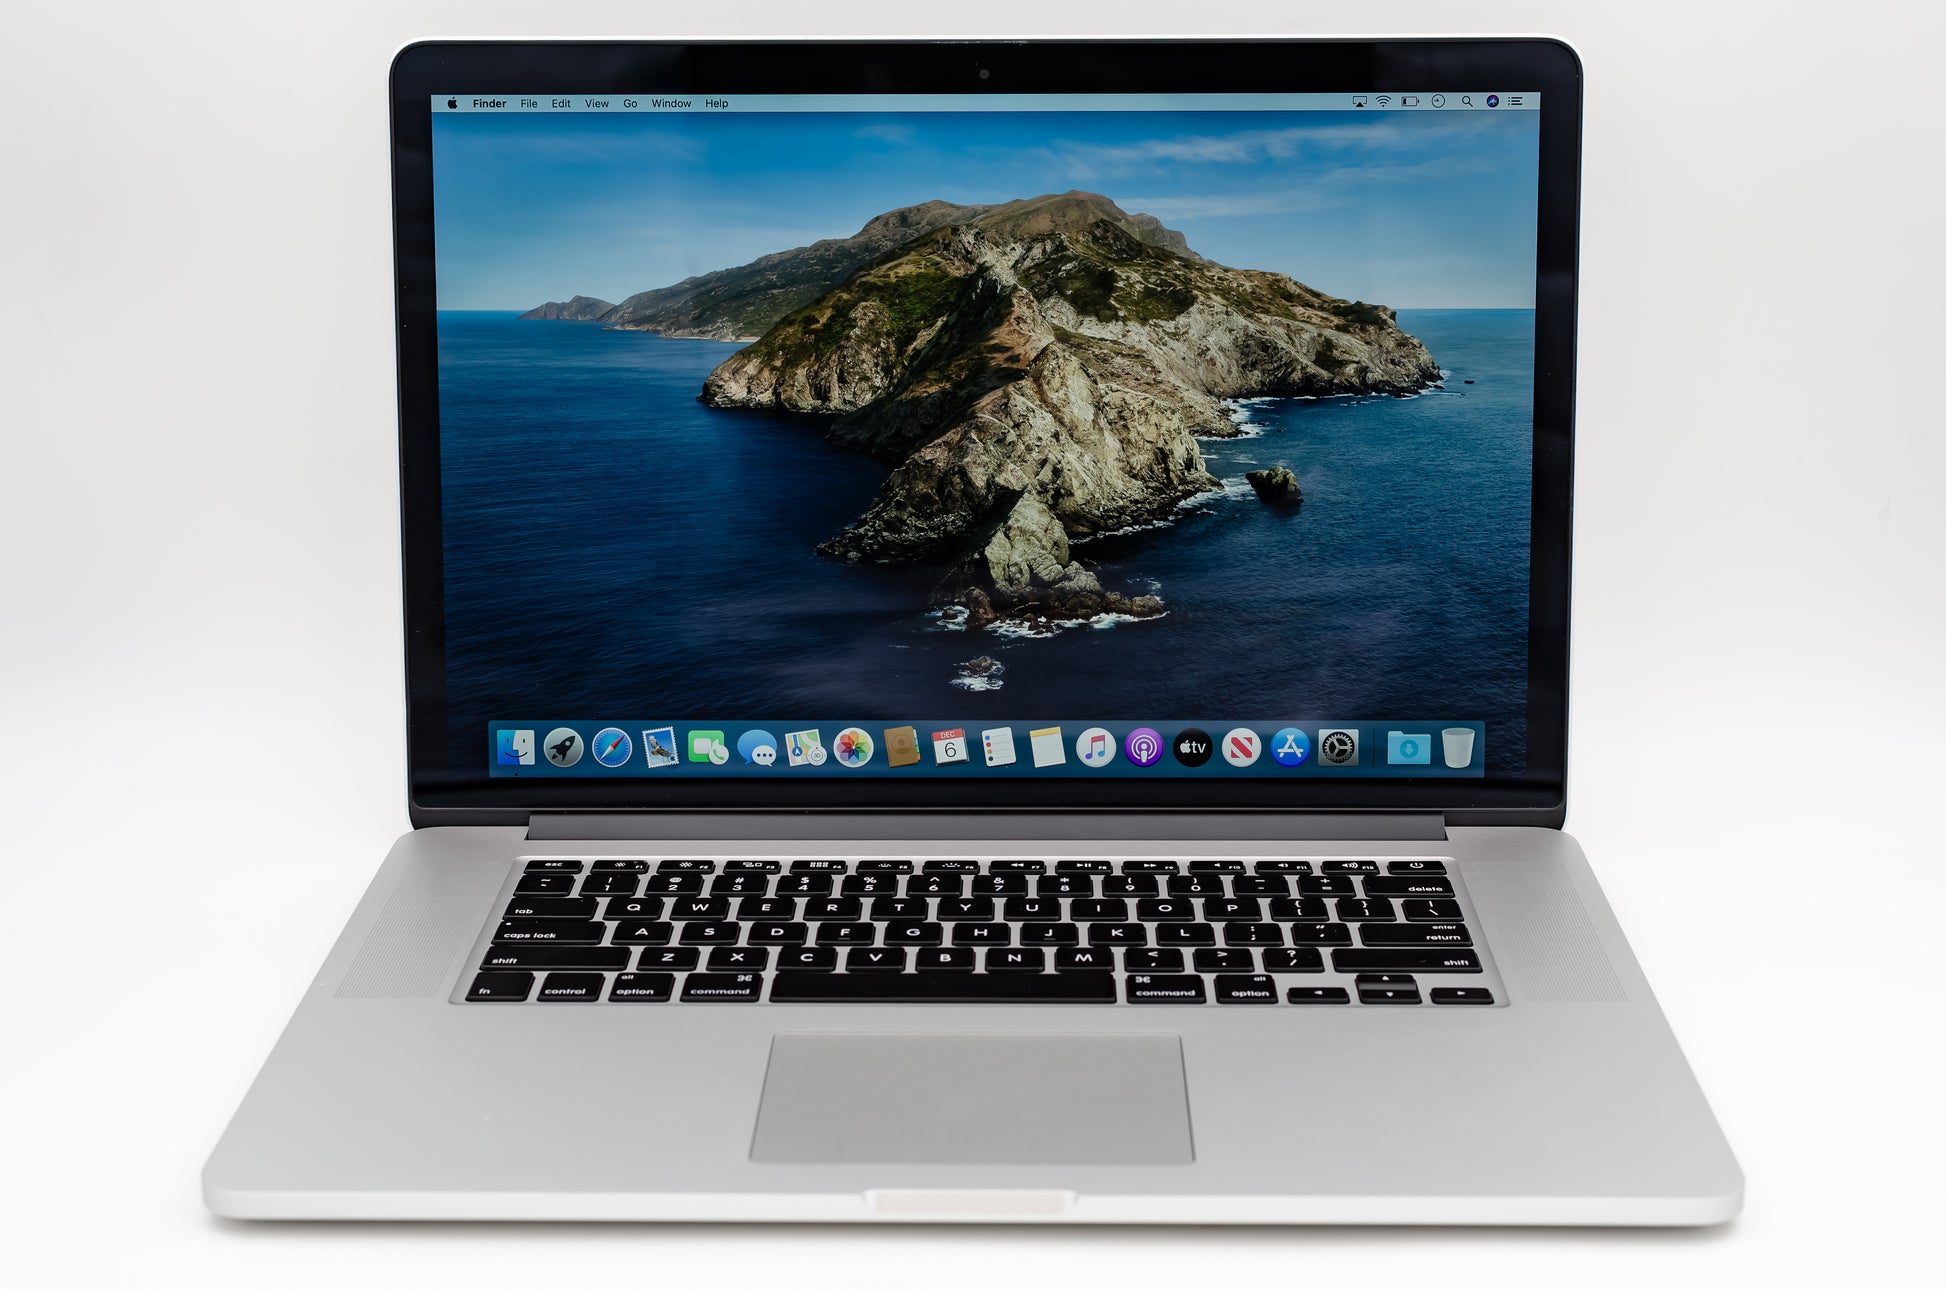 apple-mid-2009-15.4-inch-macbook-pro-a1286-aluminum-c2d - 2.53ghz processor, 4gb ram, 9400m gt - 256mb gpu-mc118ll/a-1